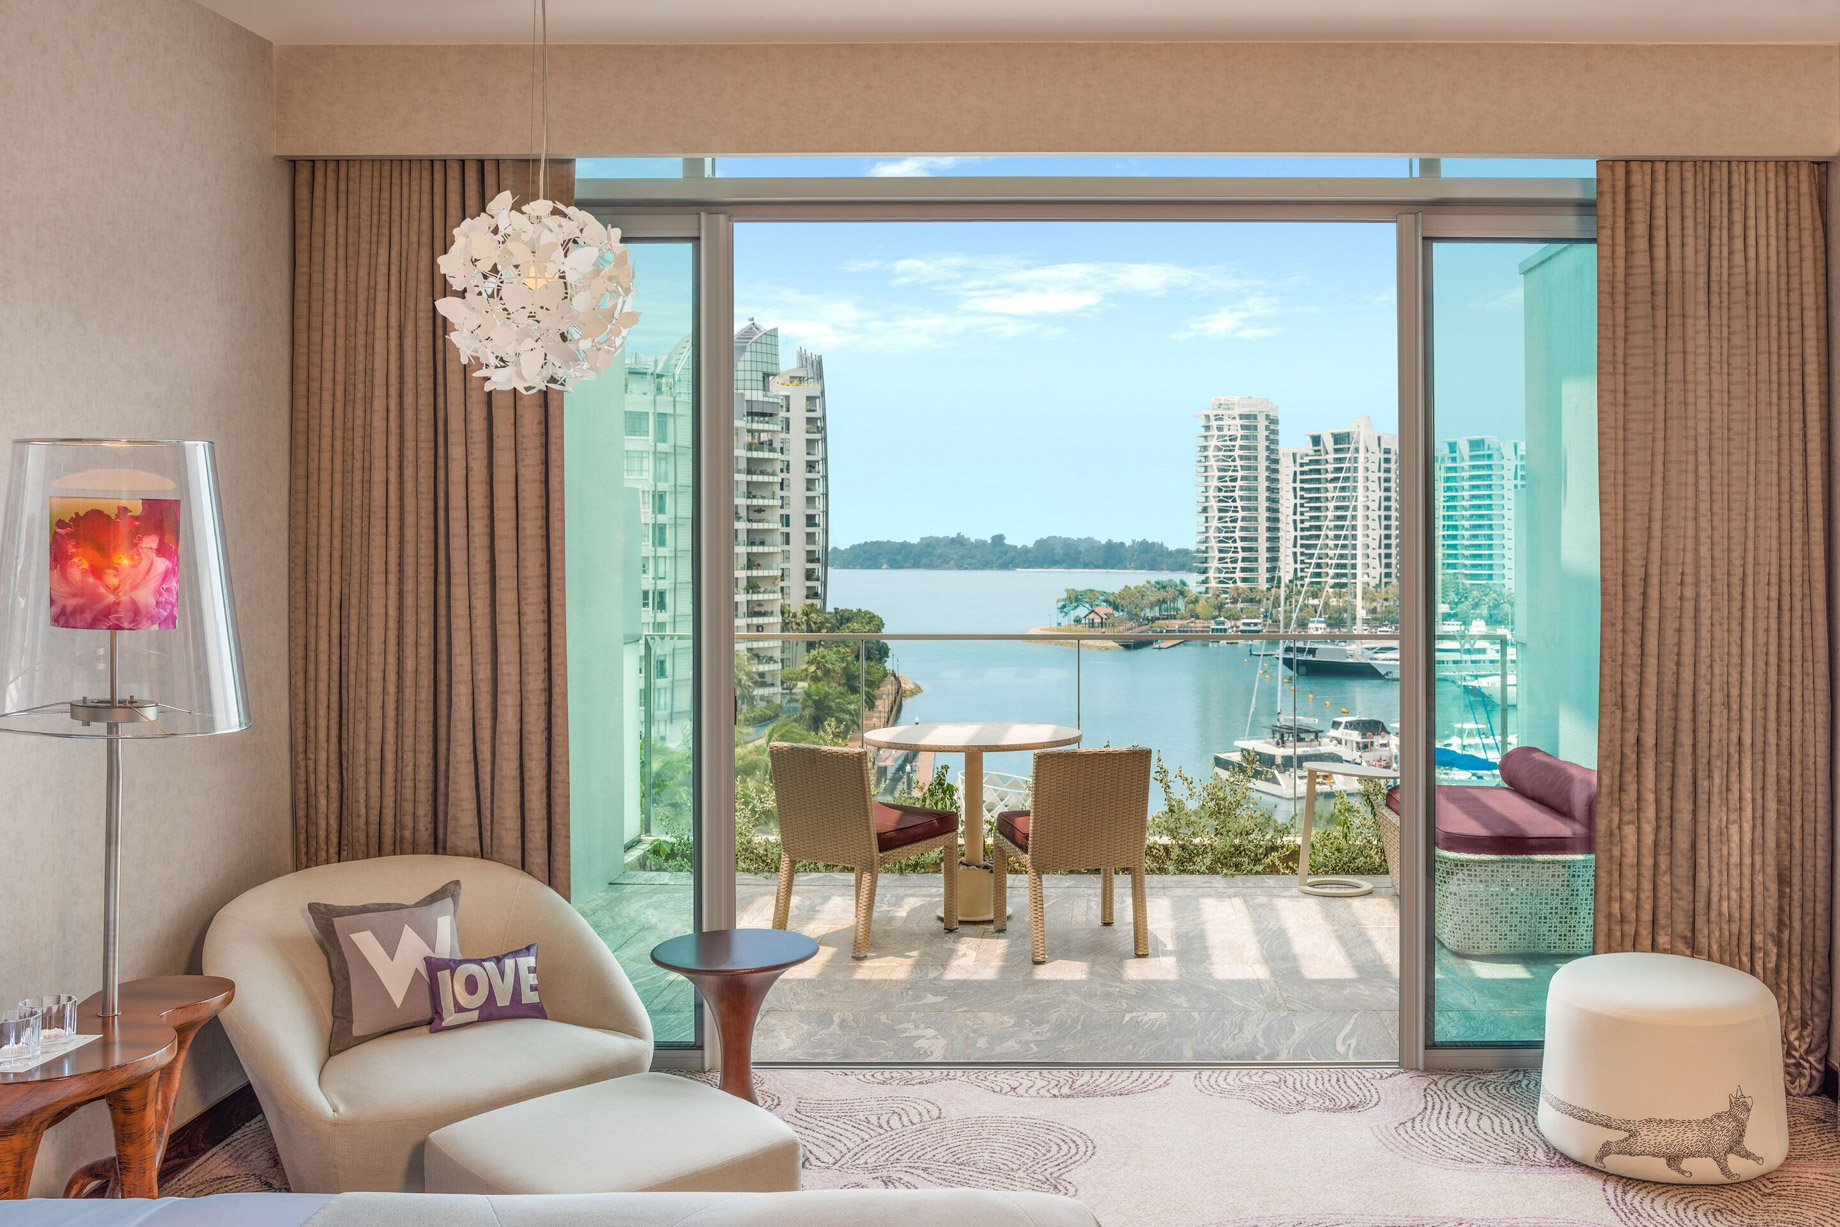 W Singapore Sentosa Cove Hotel - Singapore - Fabulous Guest Room Balcony